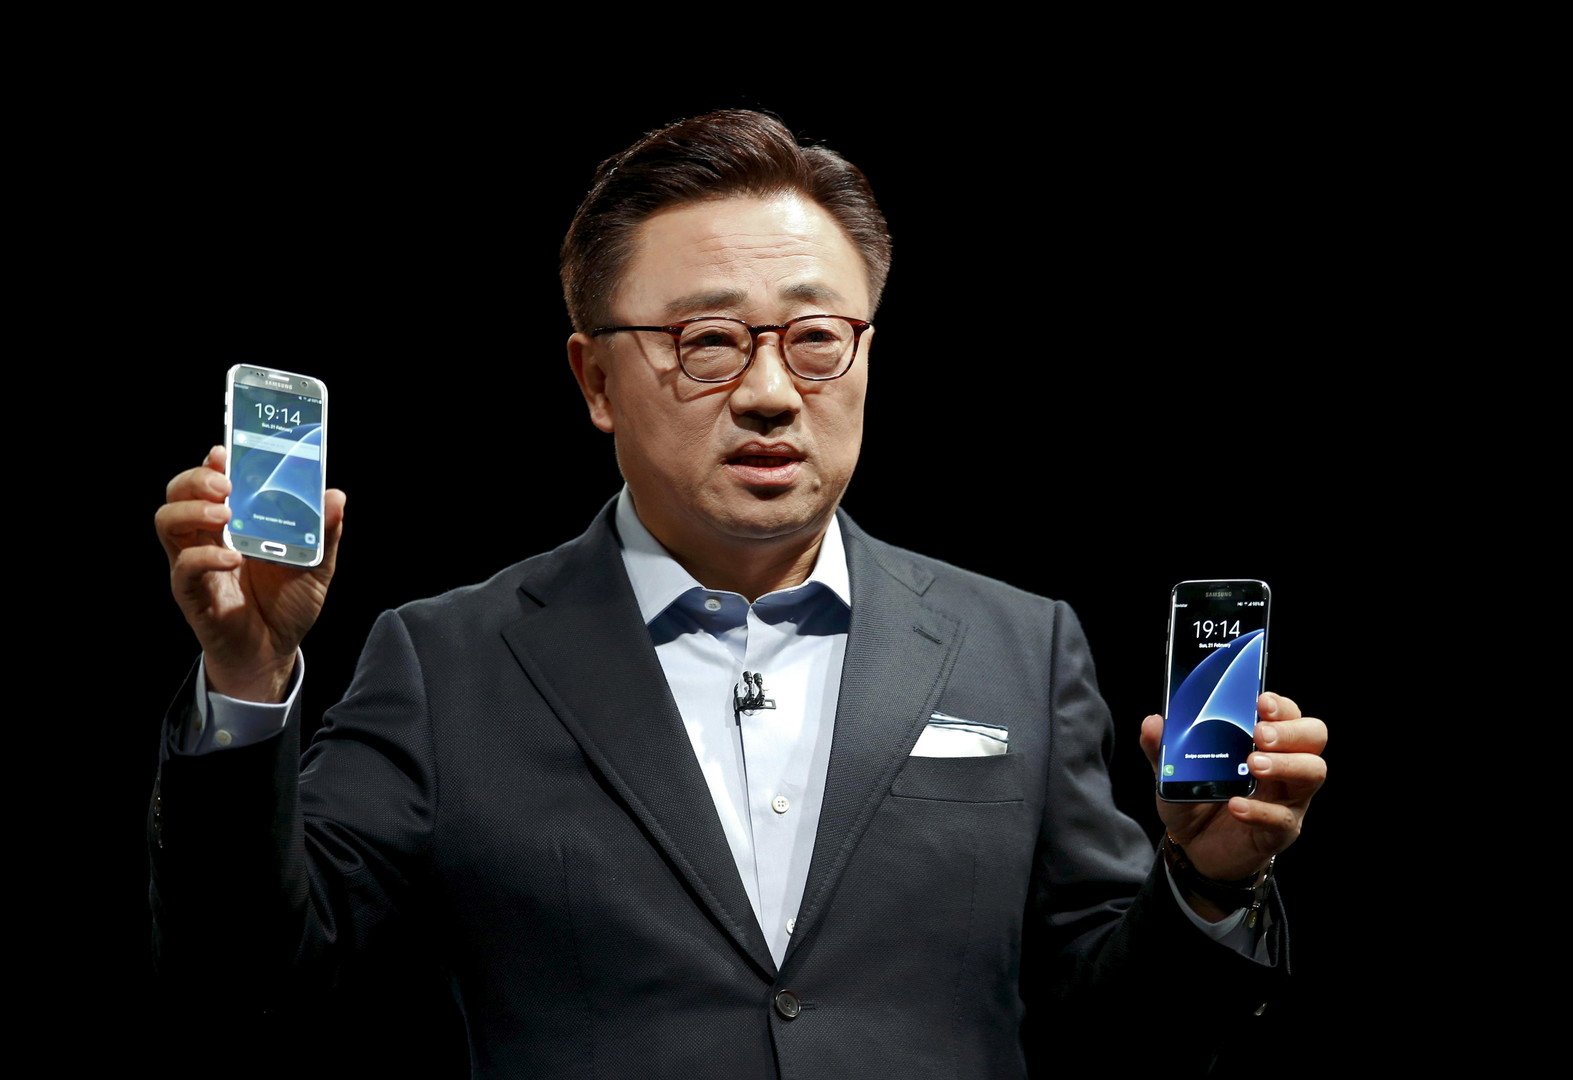 سامسونغ تطلق رسميا هاتفيها الجديدين S7 و S7 إيدج (فيديو)